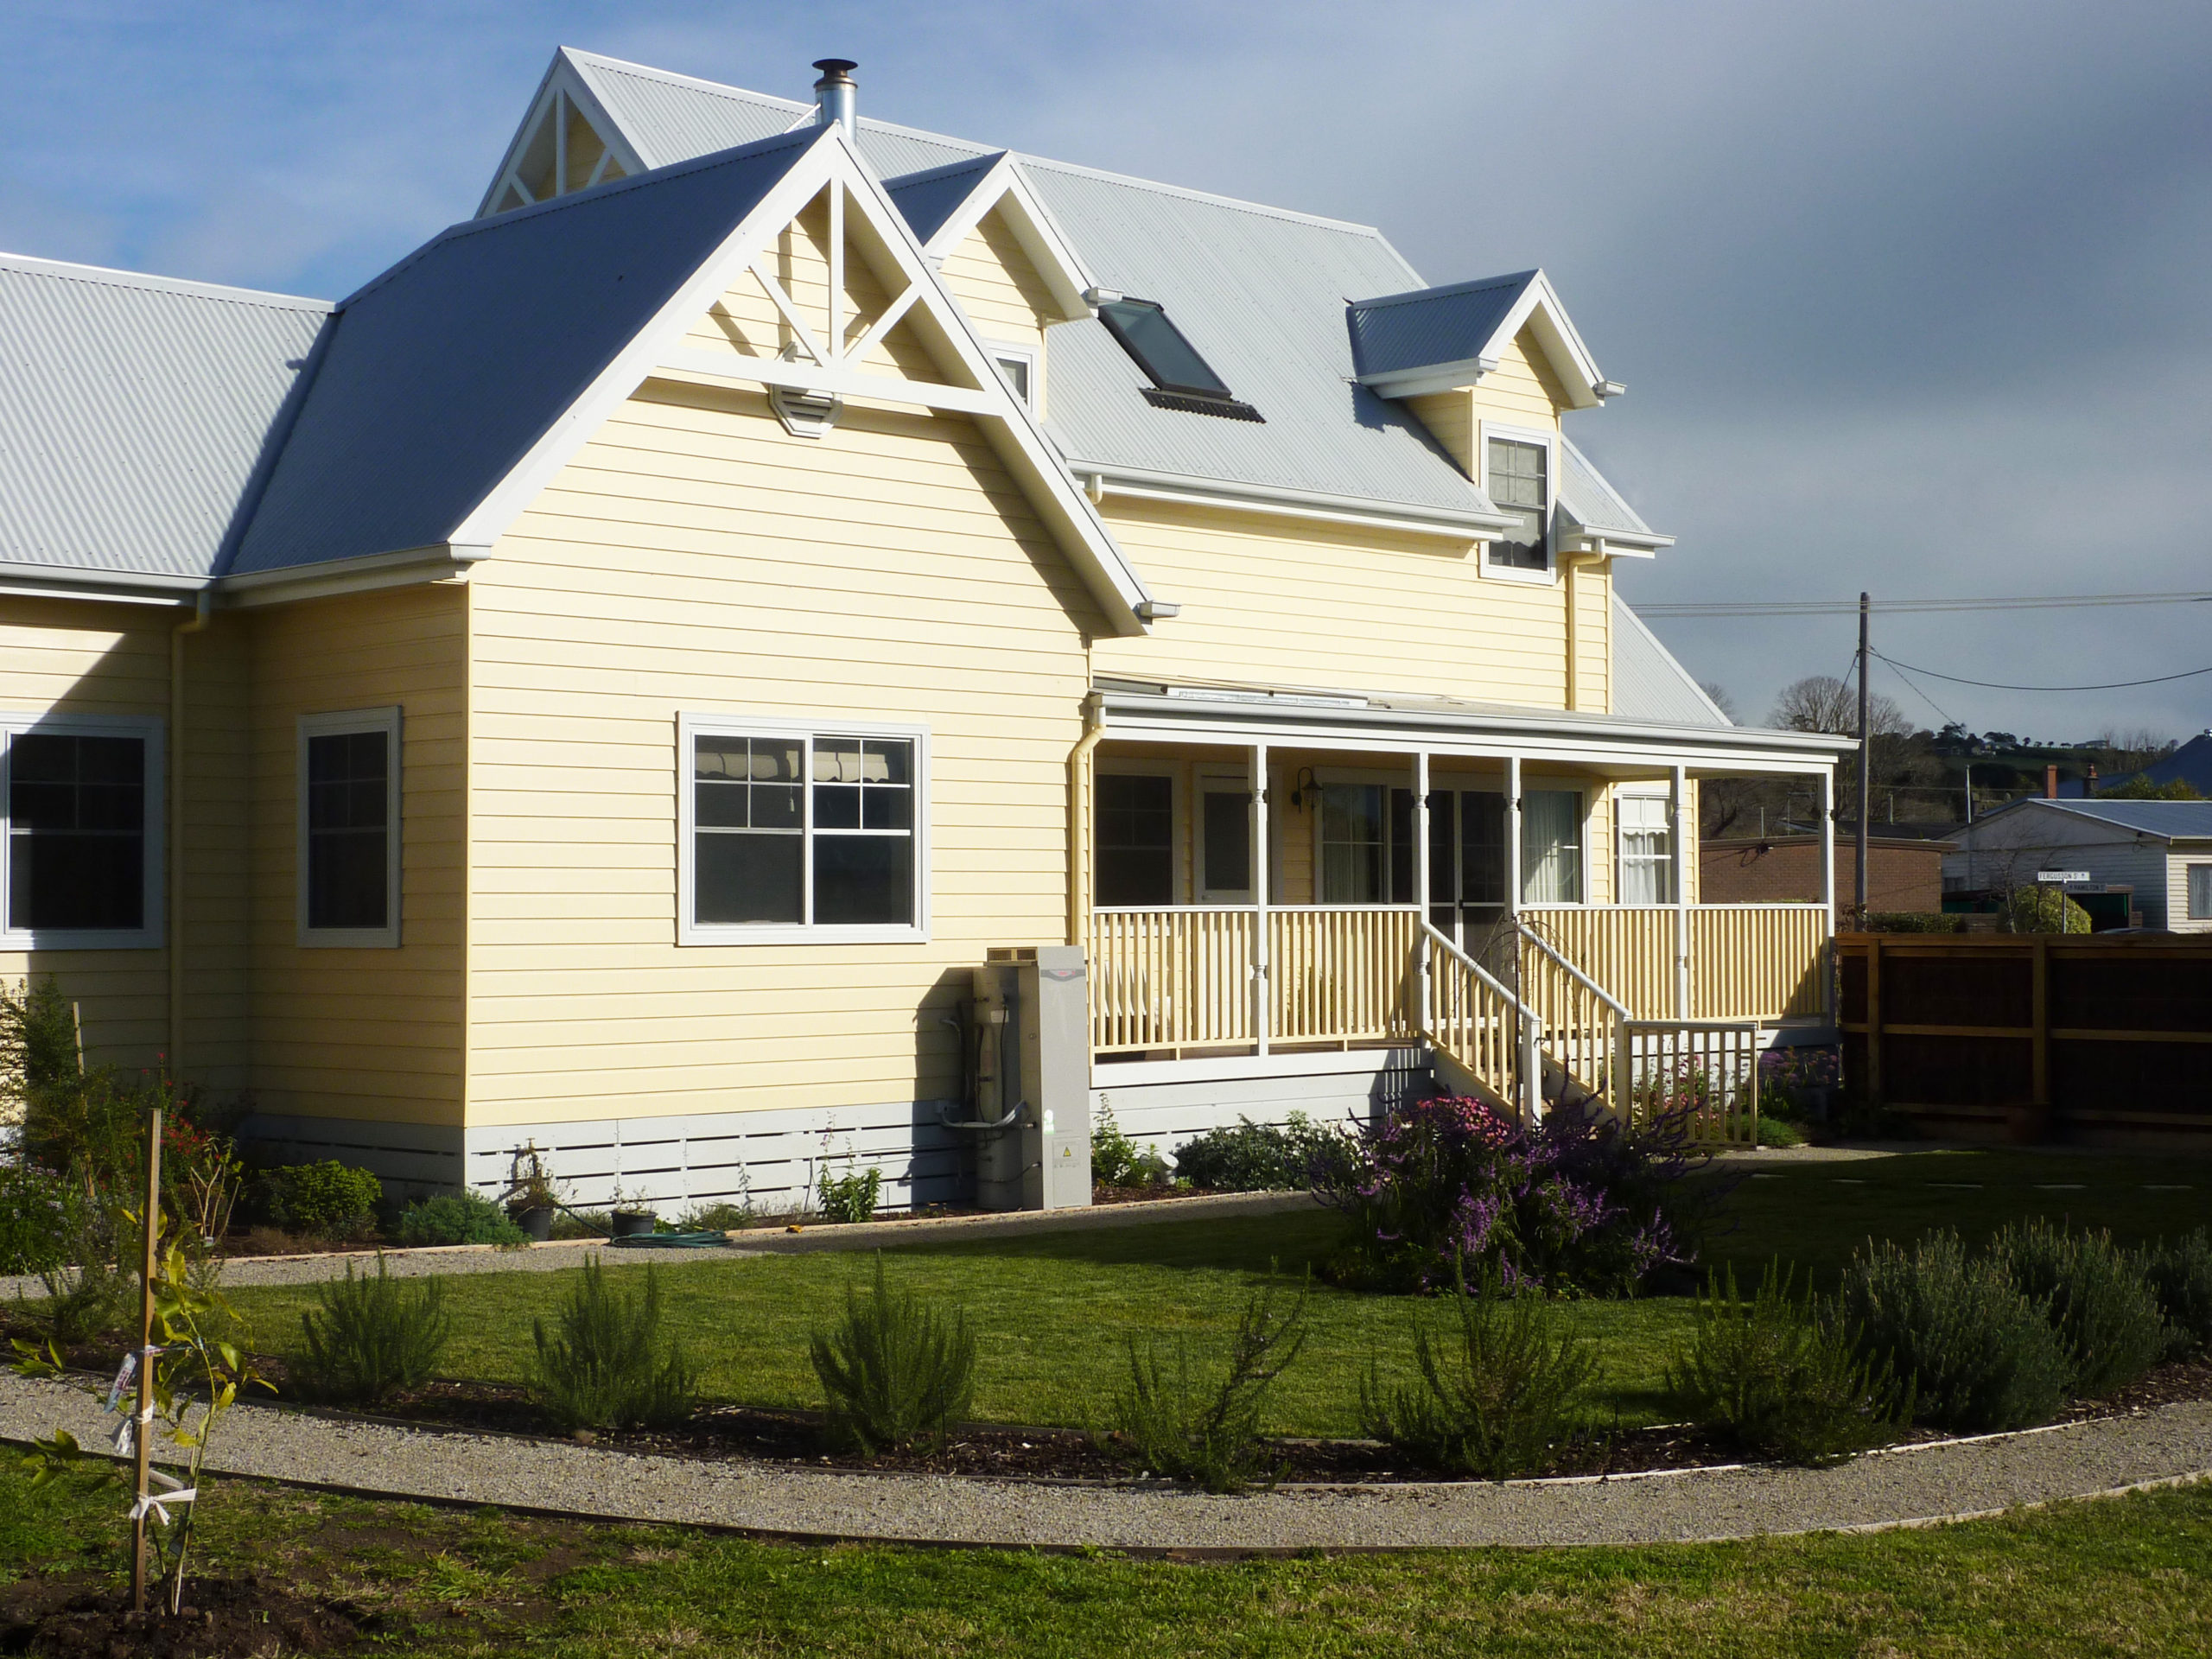 Camperdown Attic style dormers award winning home built by Farm Houses of Australia